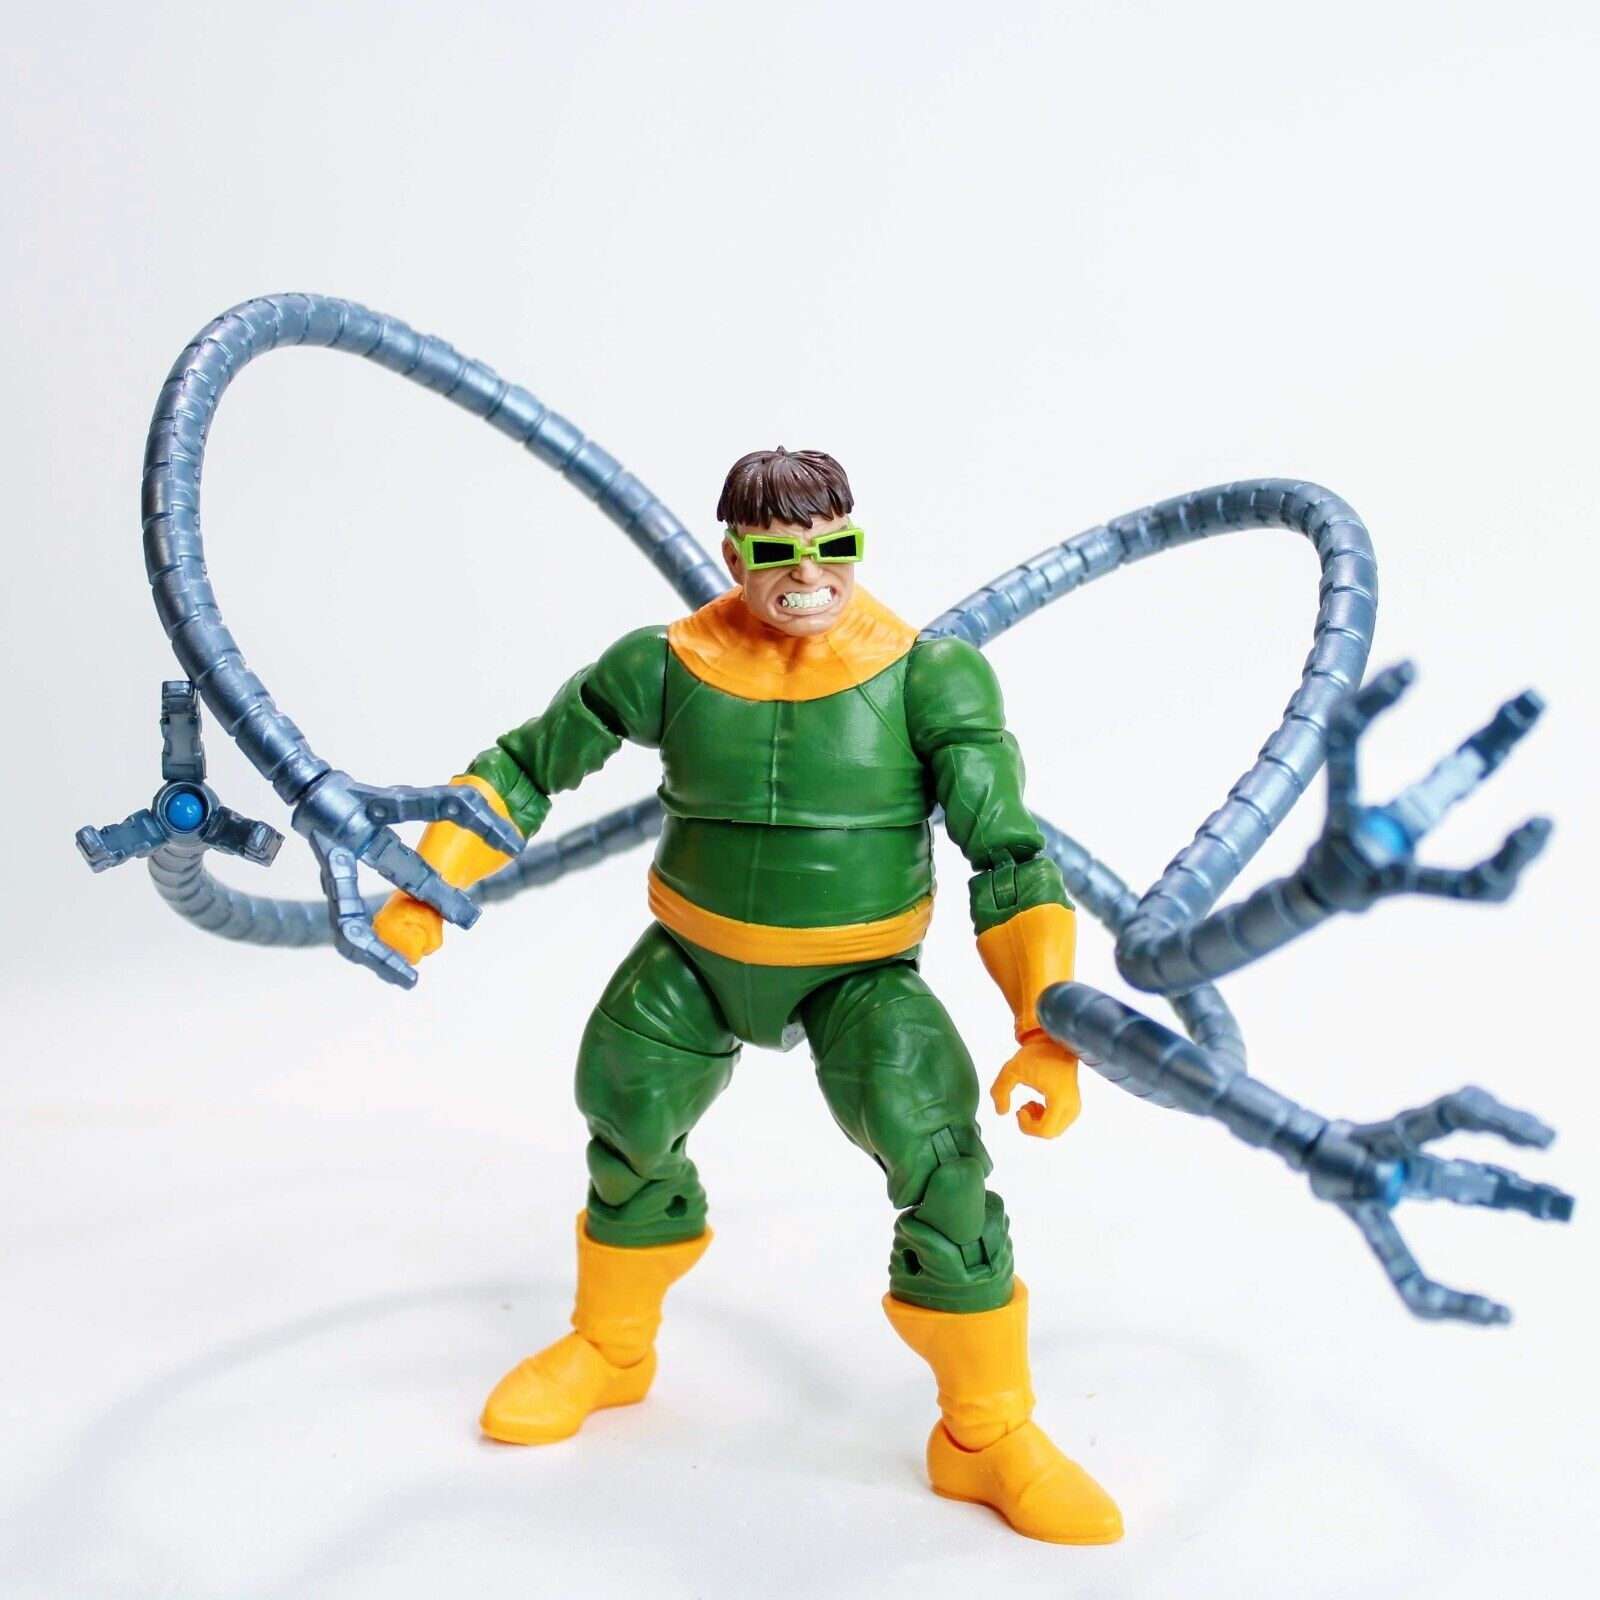 Marvel Legends 6 Doctor Octopus Spider-Man Figure Video Review